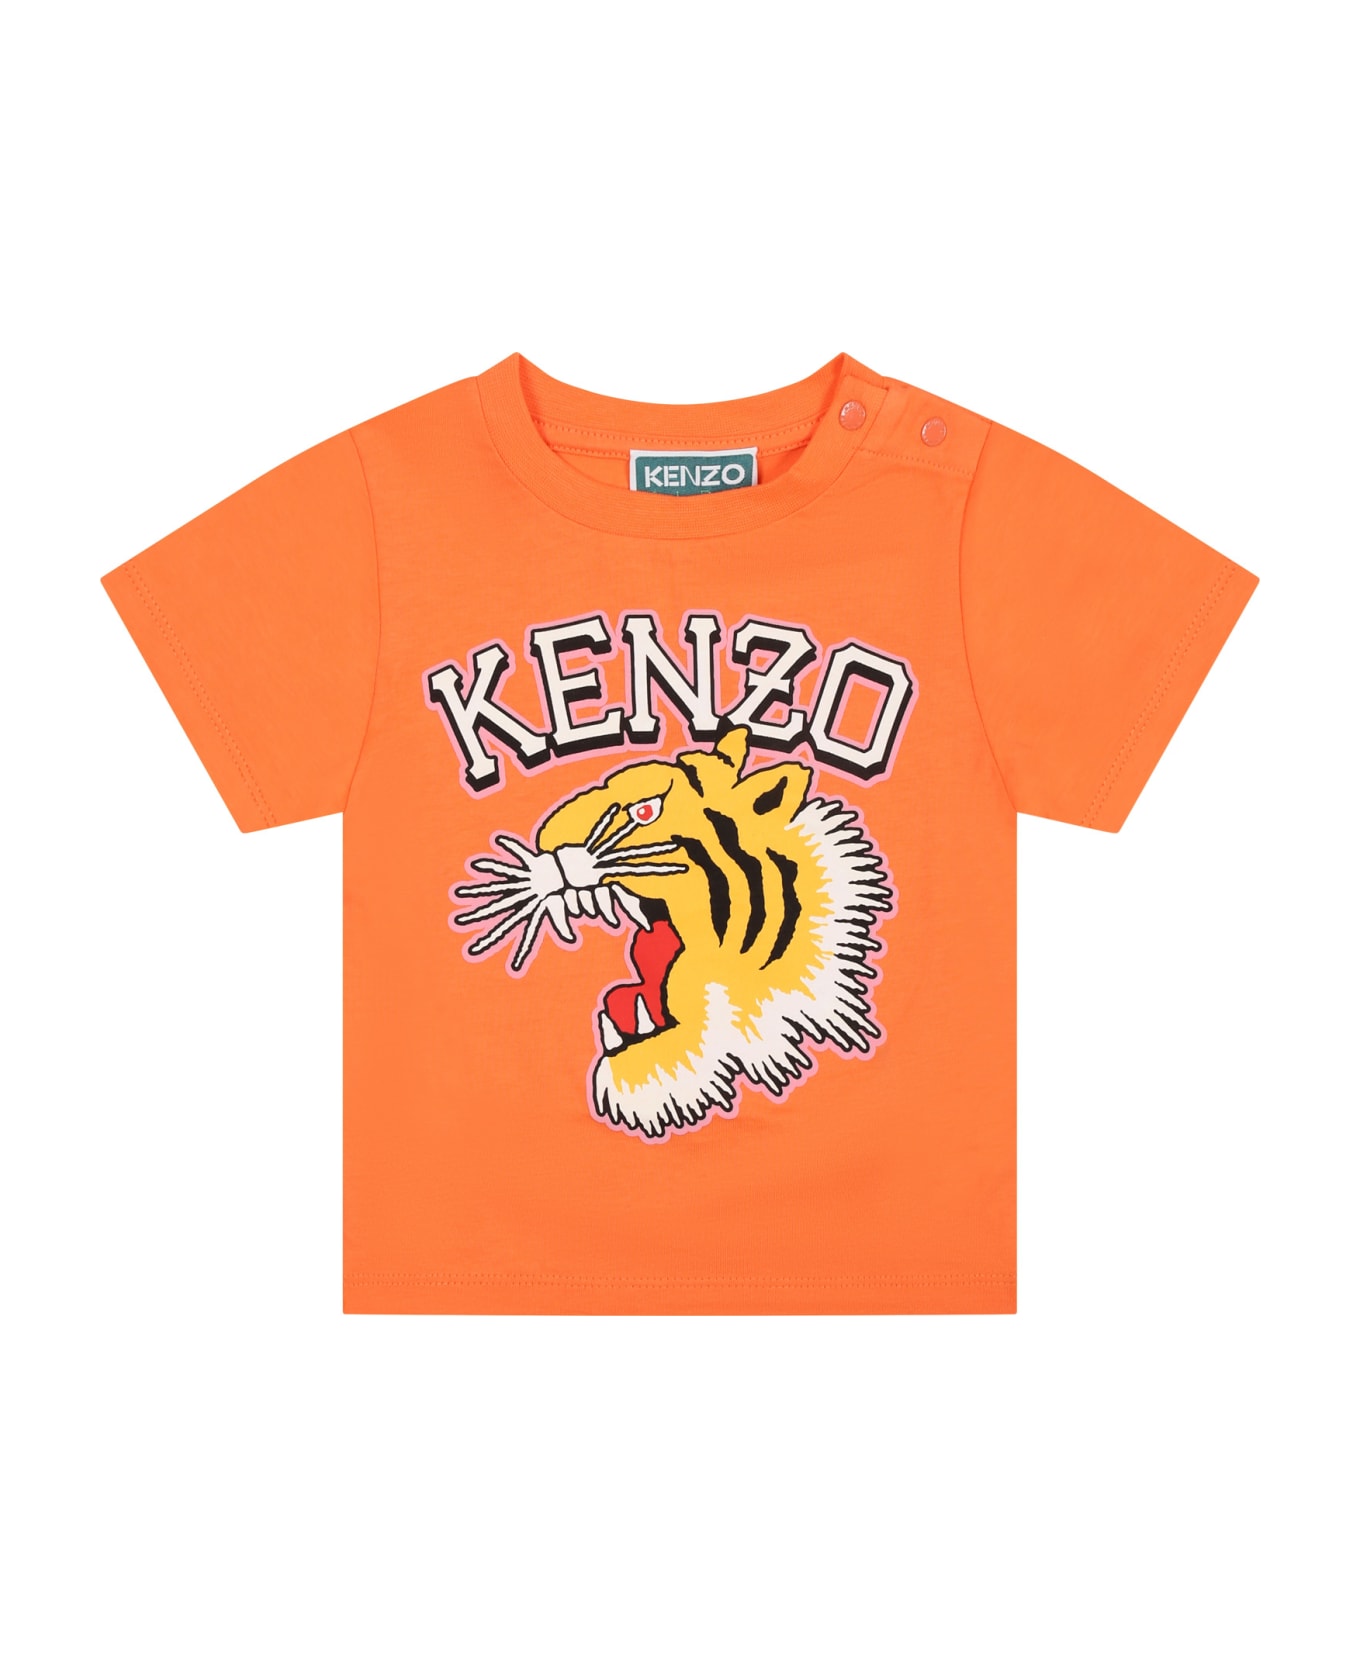 Kenzo Kids Orange T-shirt For Baby Girl With Iconic Roaring Tiger - Orange